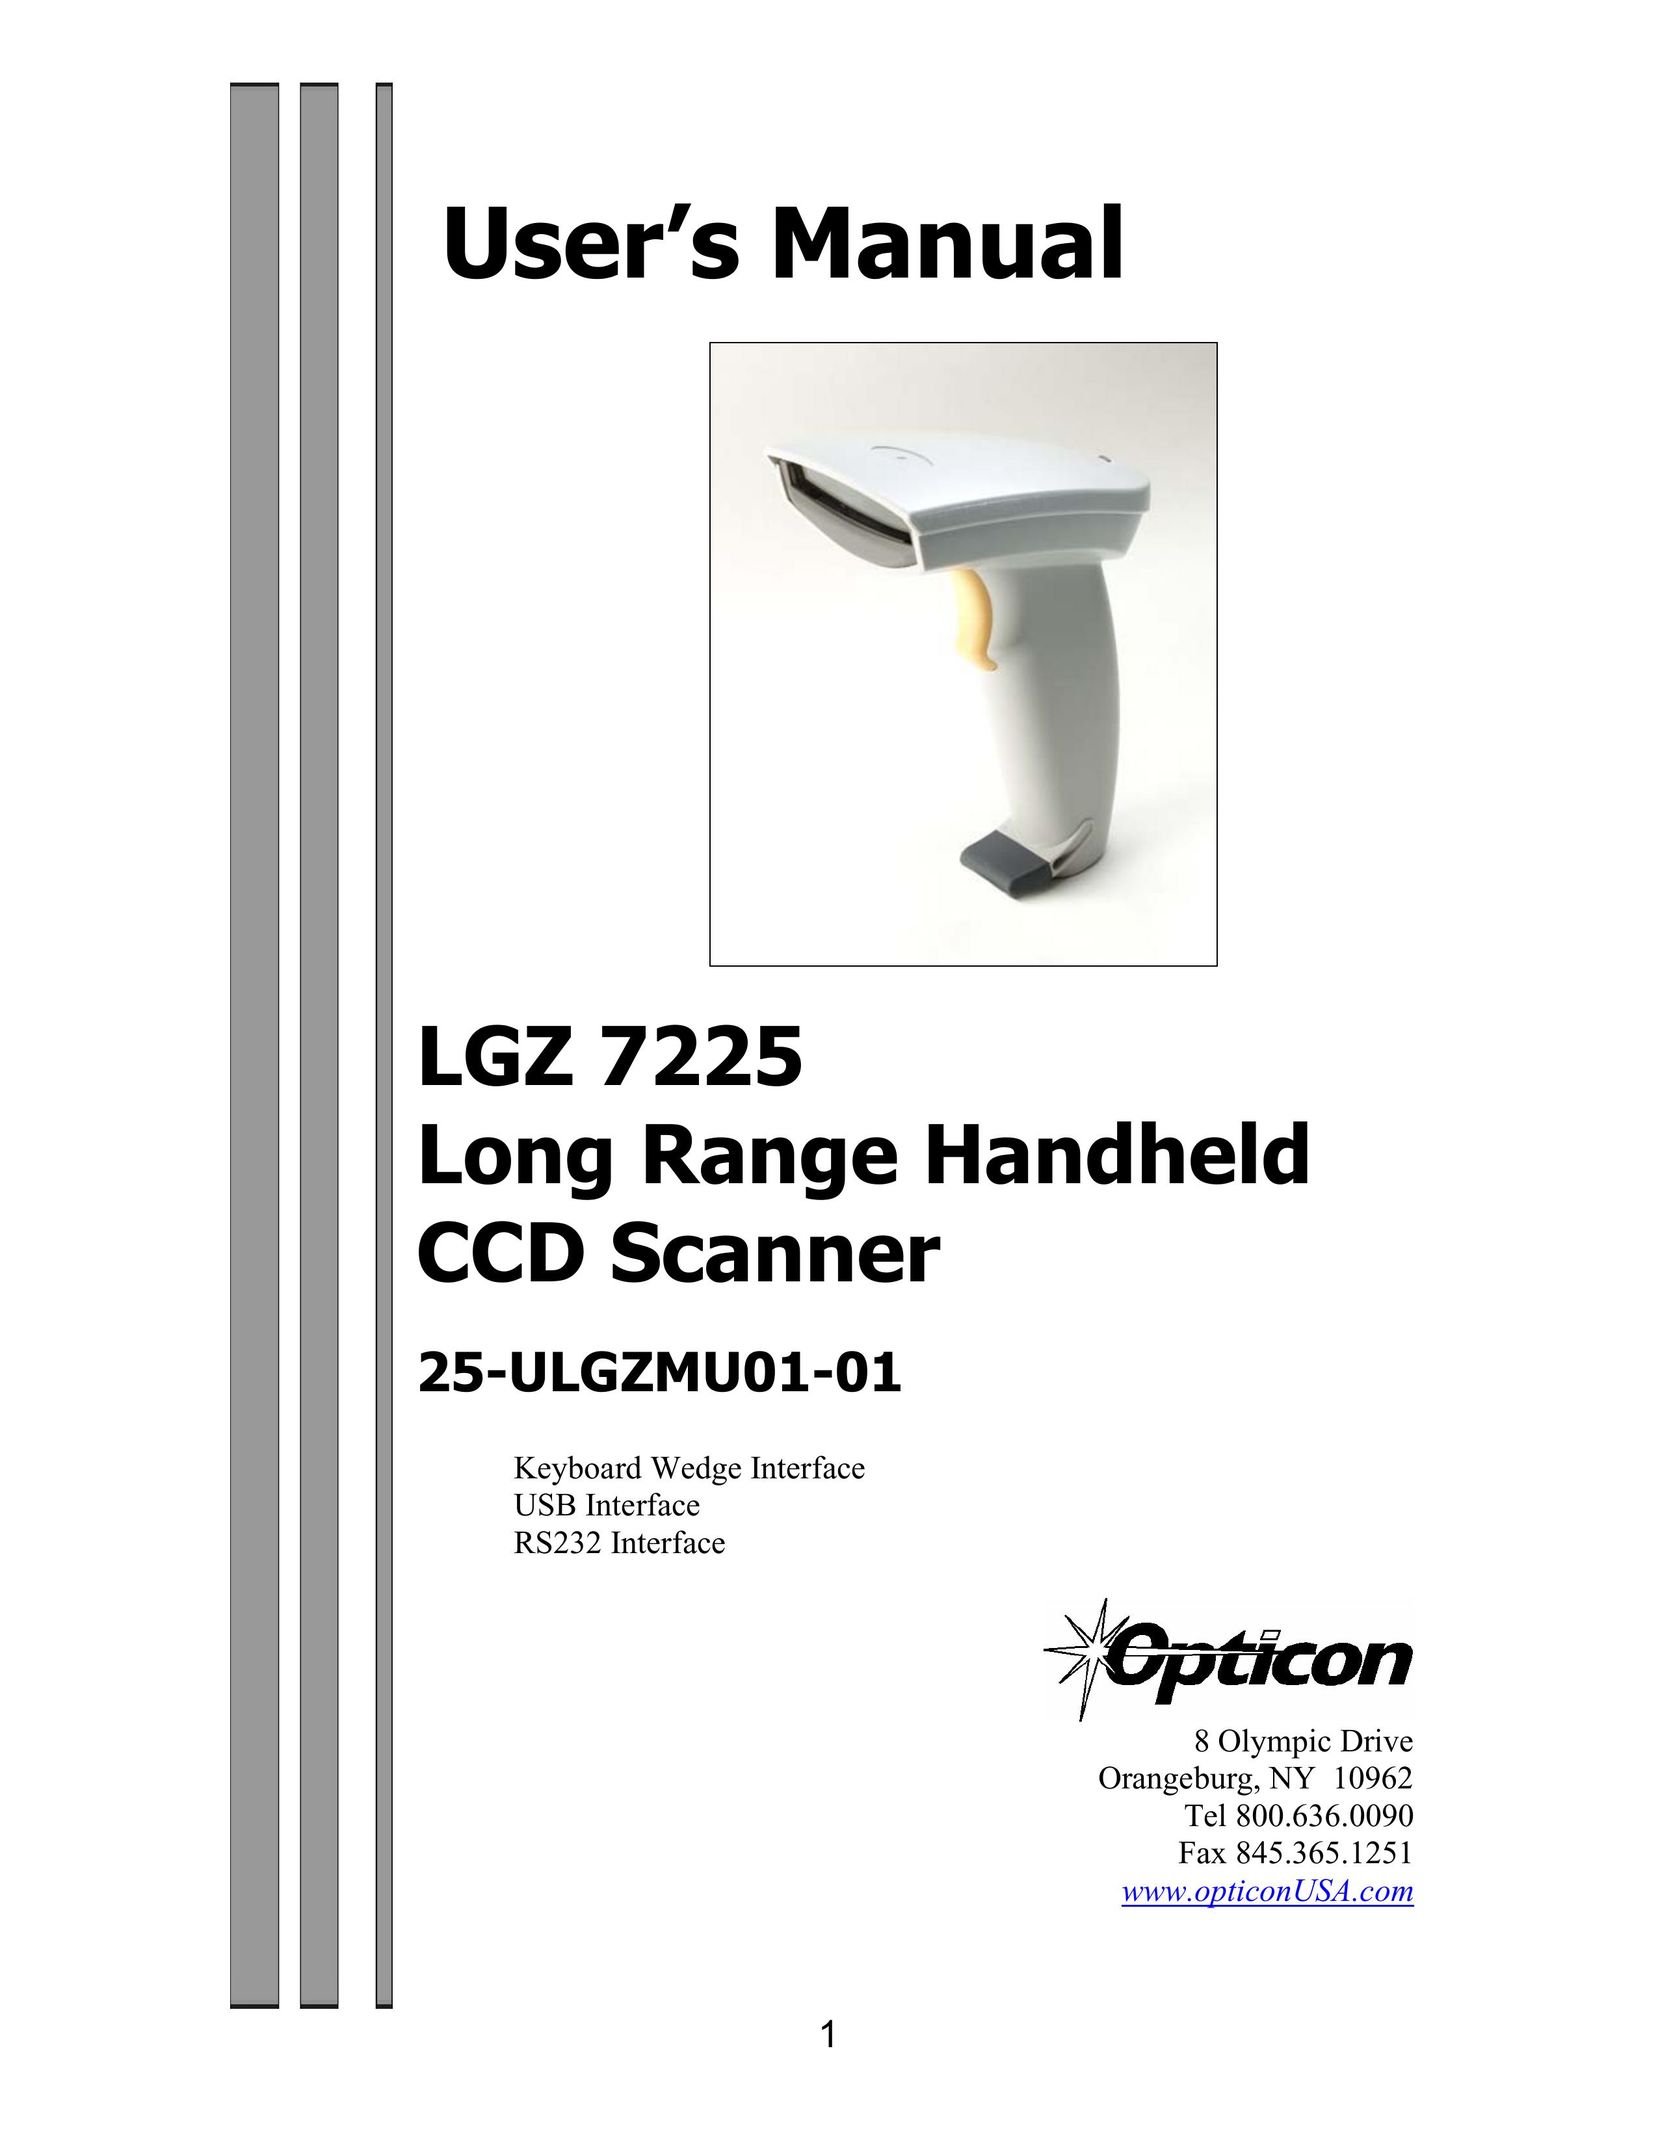 Opticon LGZ 7225 Scanner User Manual